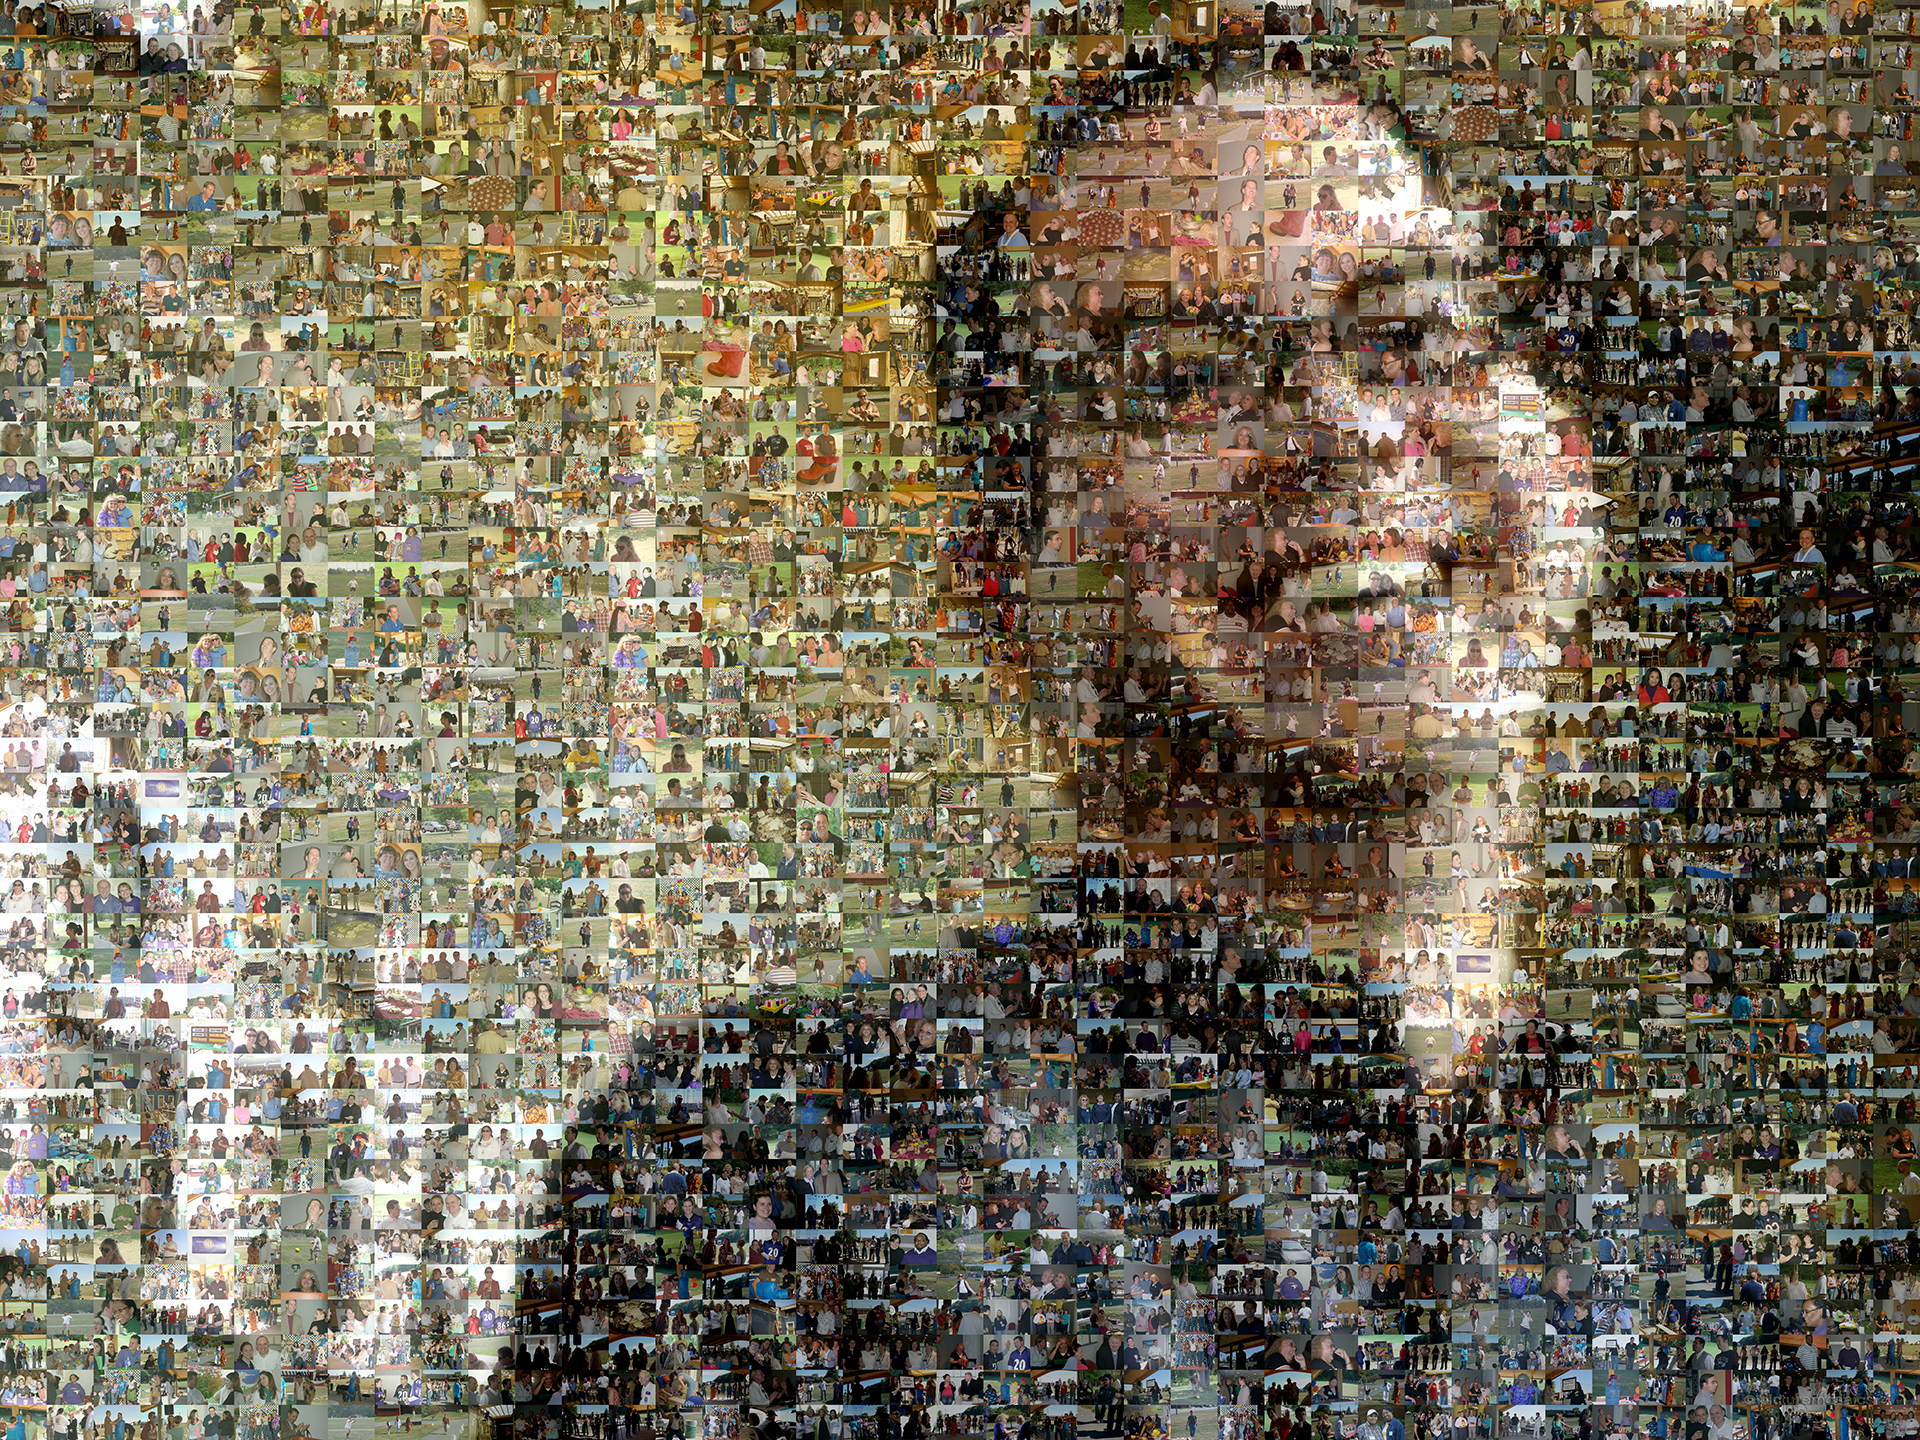 photo mosaic created using 851 corporate photos